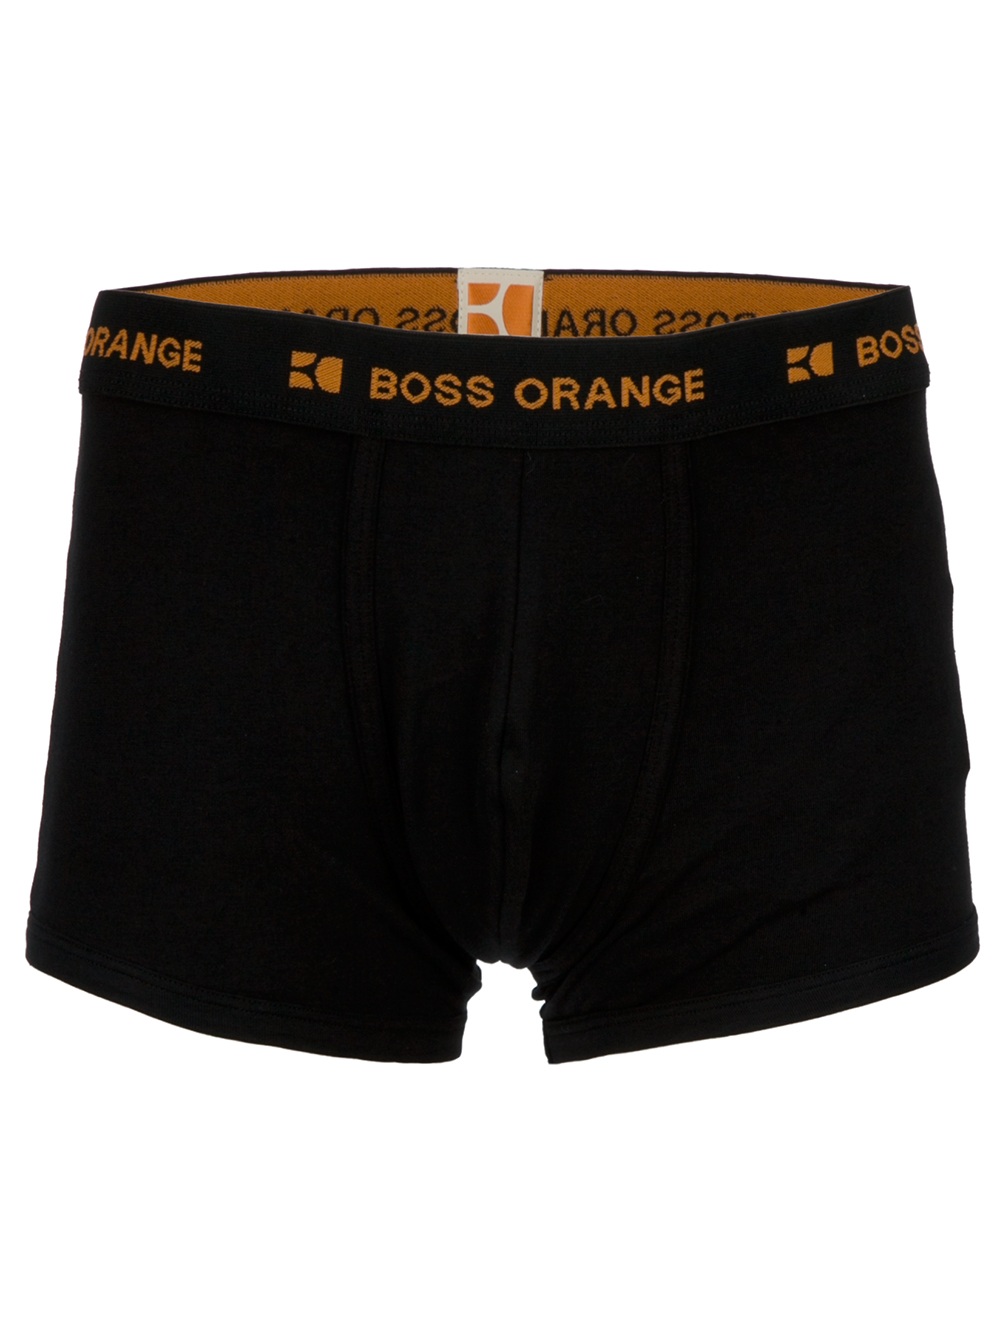 BOSS Orange Two Pack Boxer Shorts in Blue for Men - Lyst